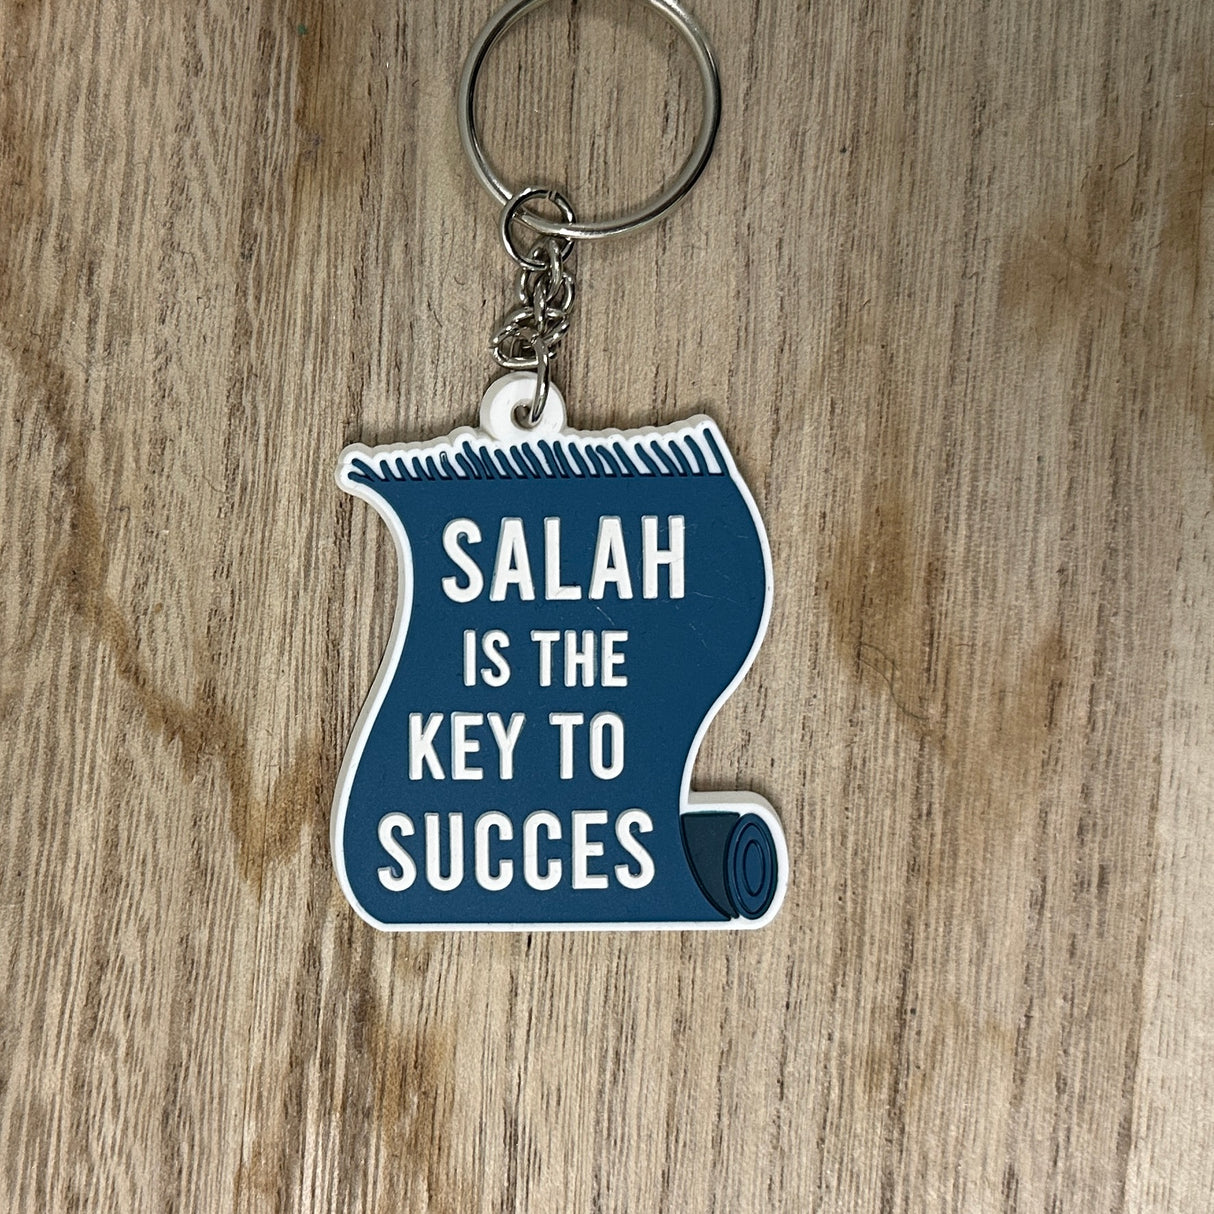 Salah is the key to success - key ring